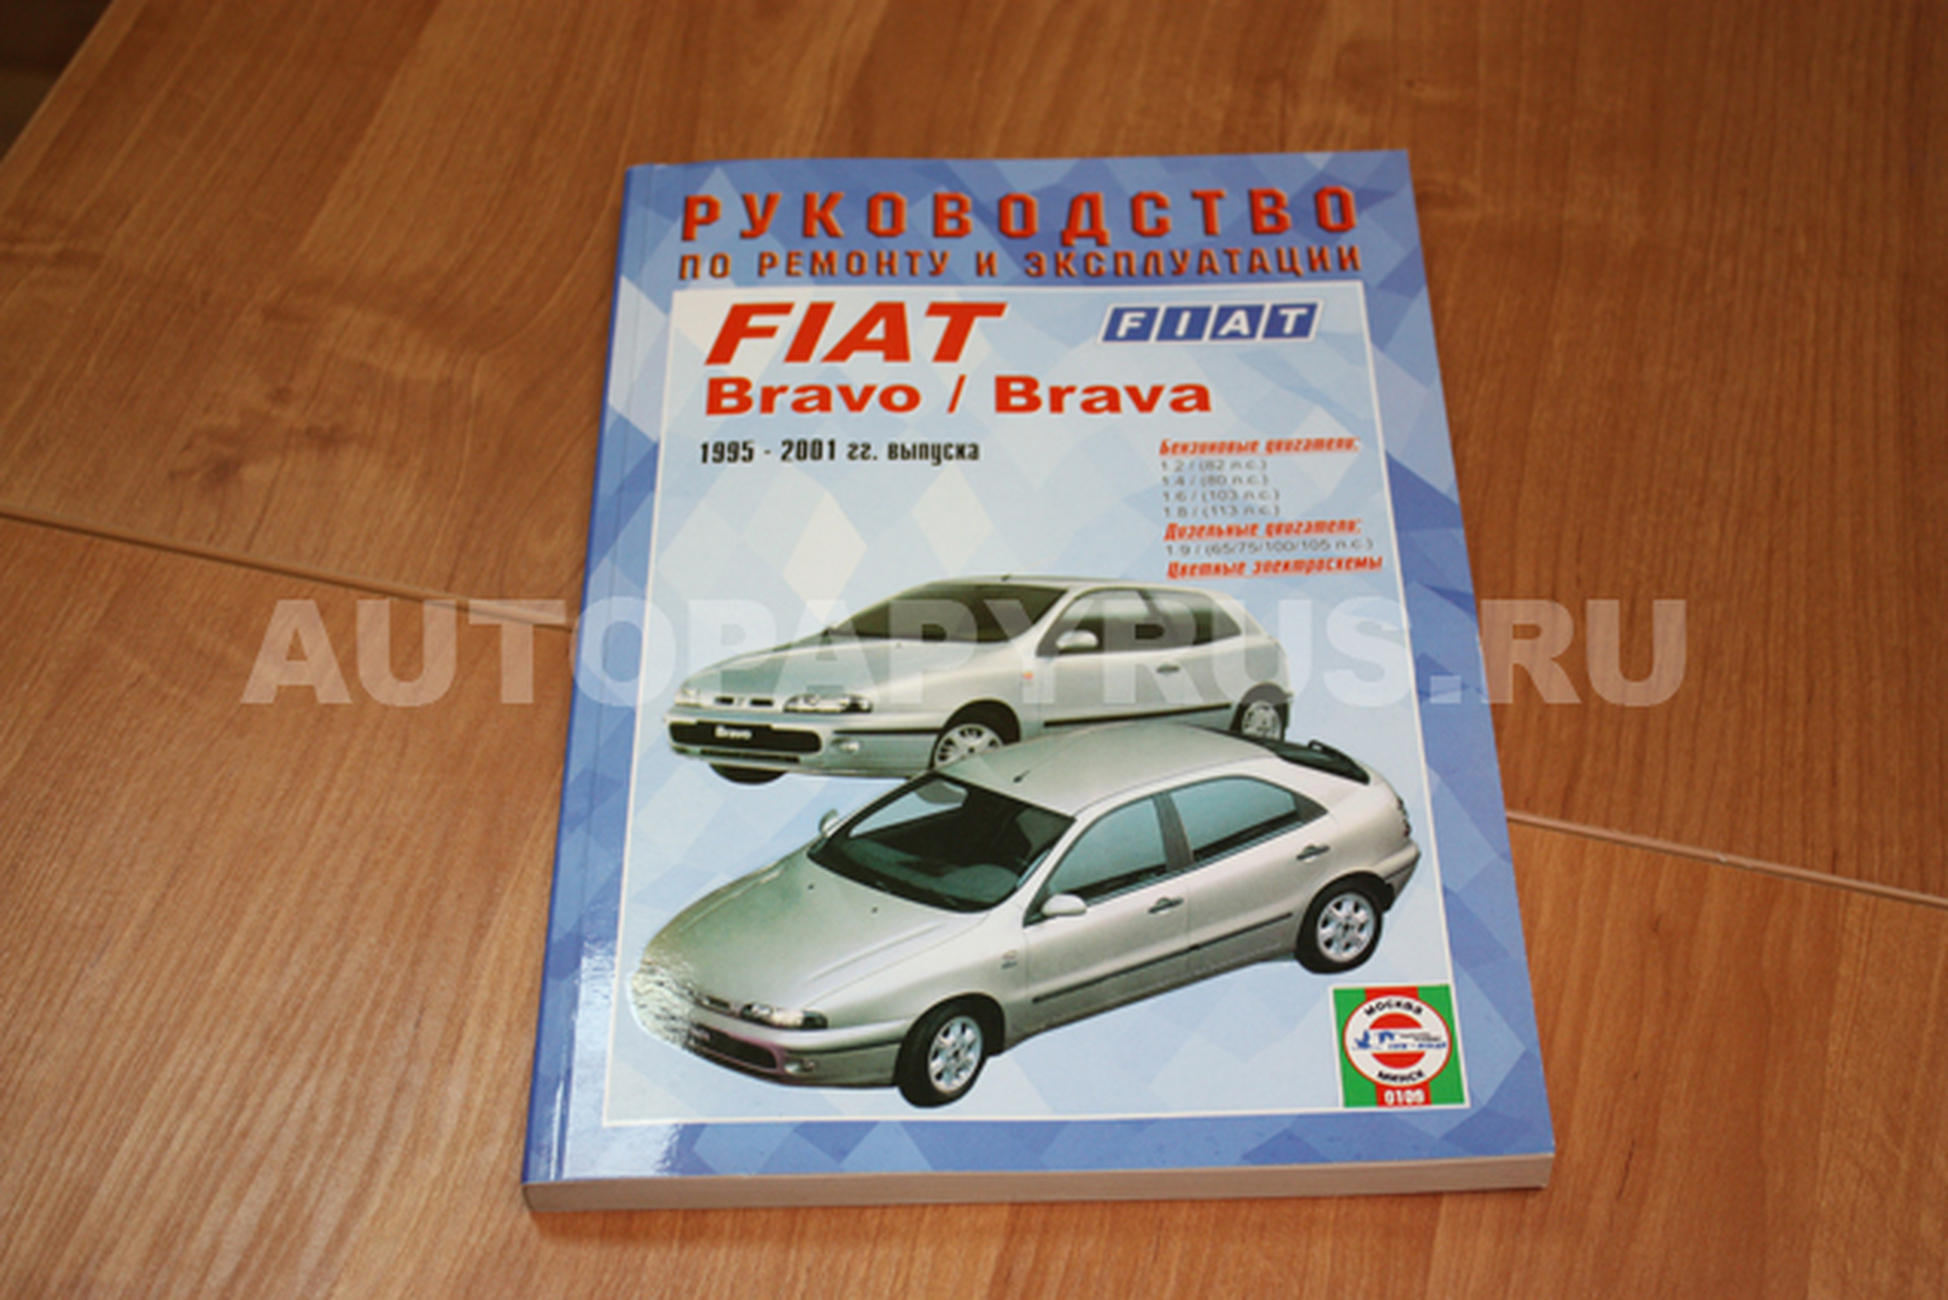 Книга: FIAT BRAVO / BRAVA (б , д) 1995-2001 г.в., рем., экспл., то | Чижовка